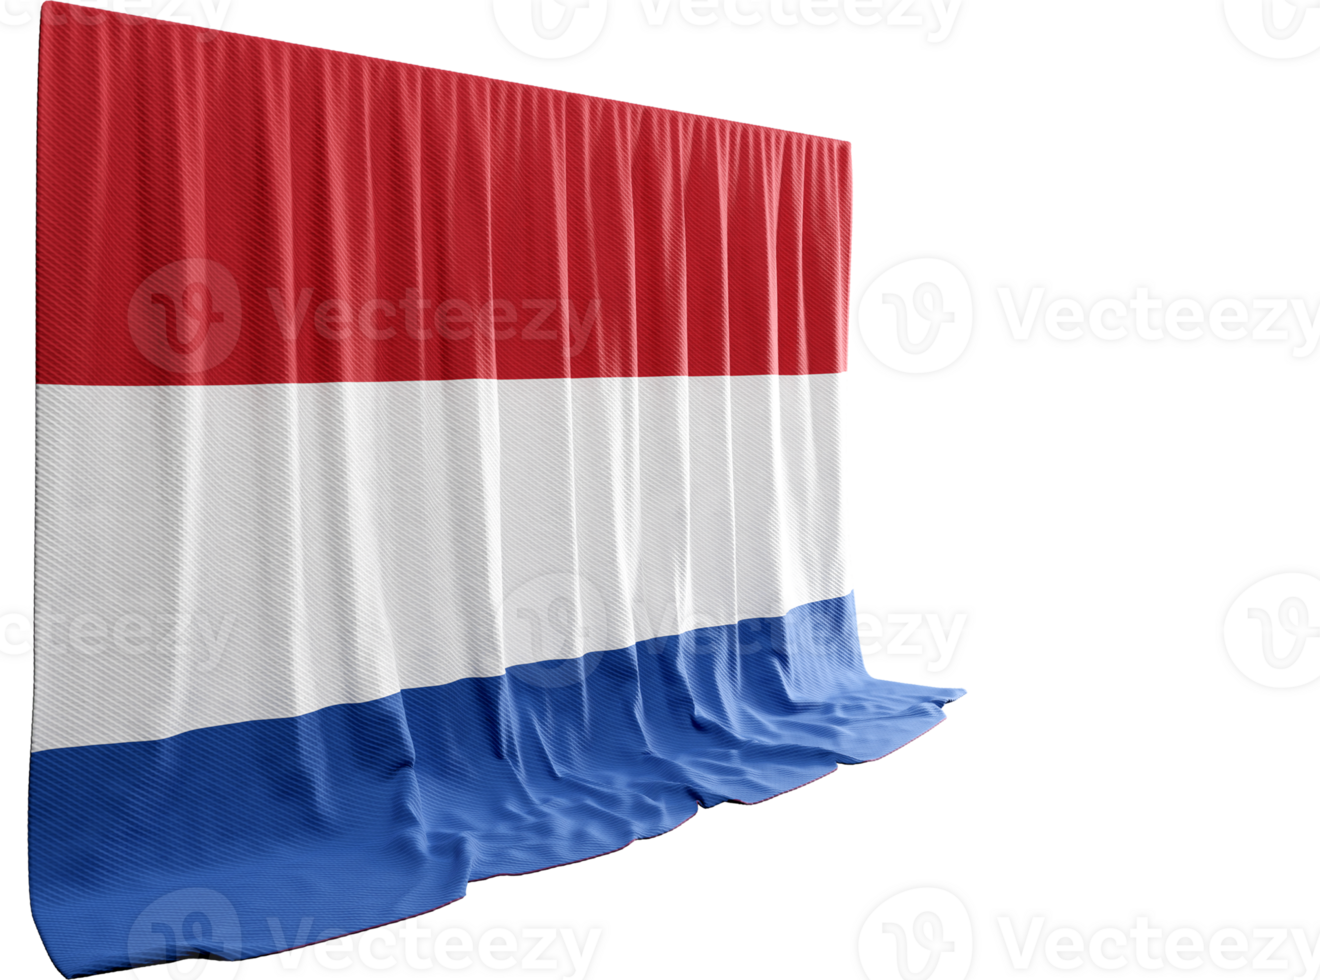 Netherlands Flag Curtain in 3D Rendering called Flag of Netherlands png